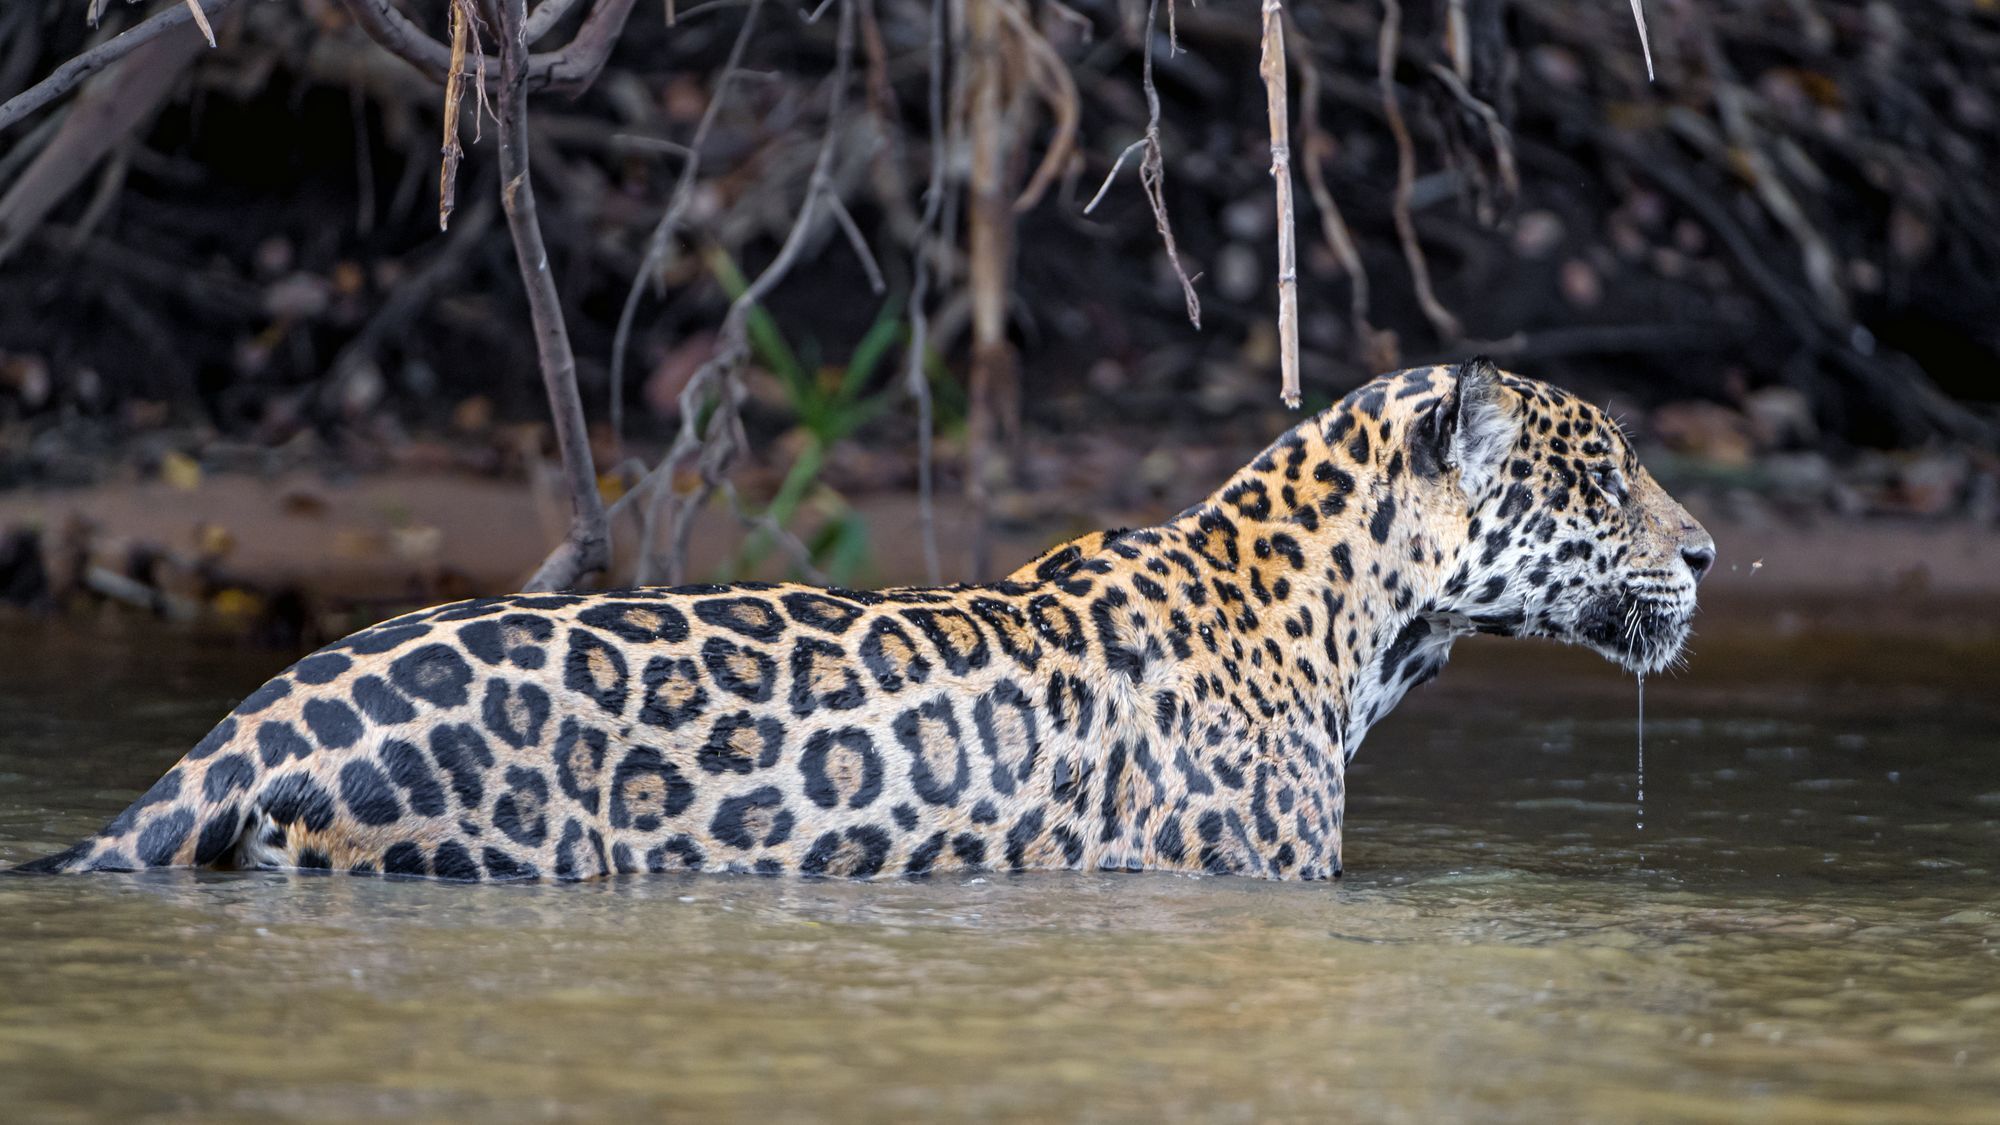 Female jaguar with cubs - Jaguar, Young, Big cats, Cat family, Predatory animals, Wild animals, wildlife, Brazil, South America, The photo, Longpost, River, 